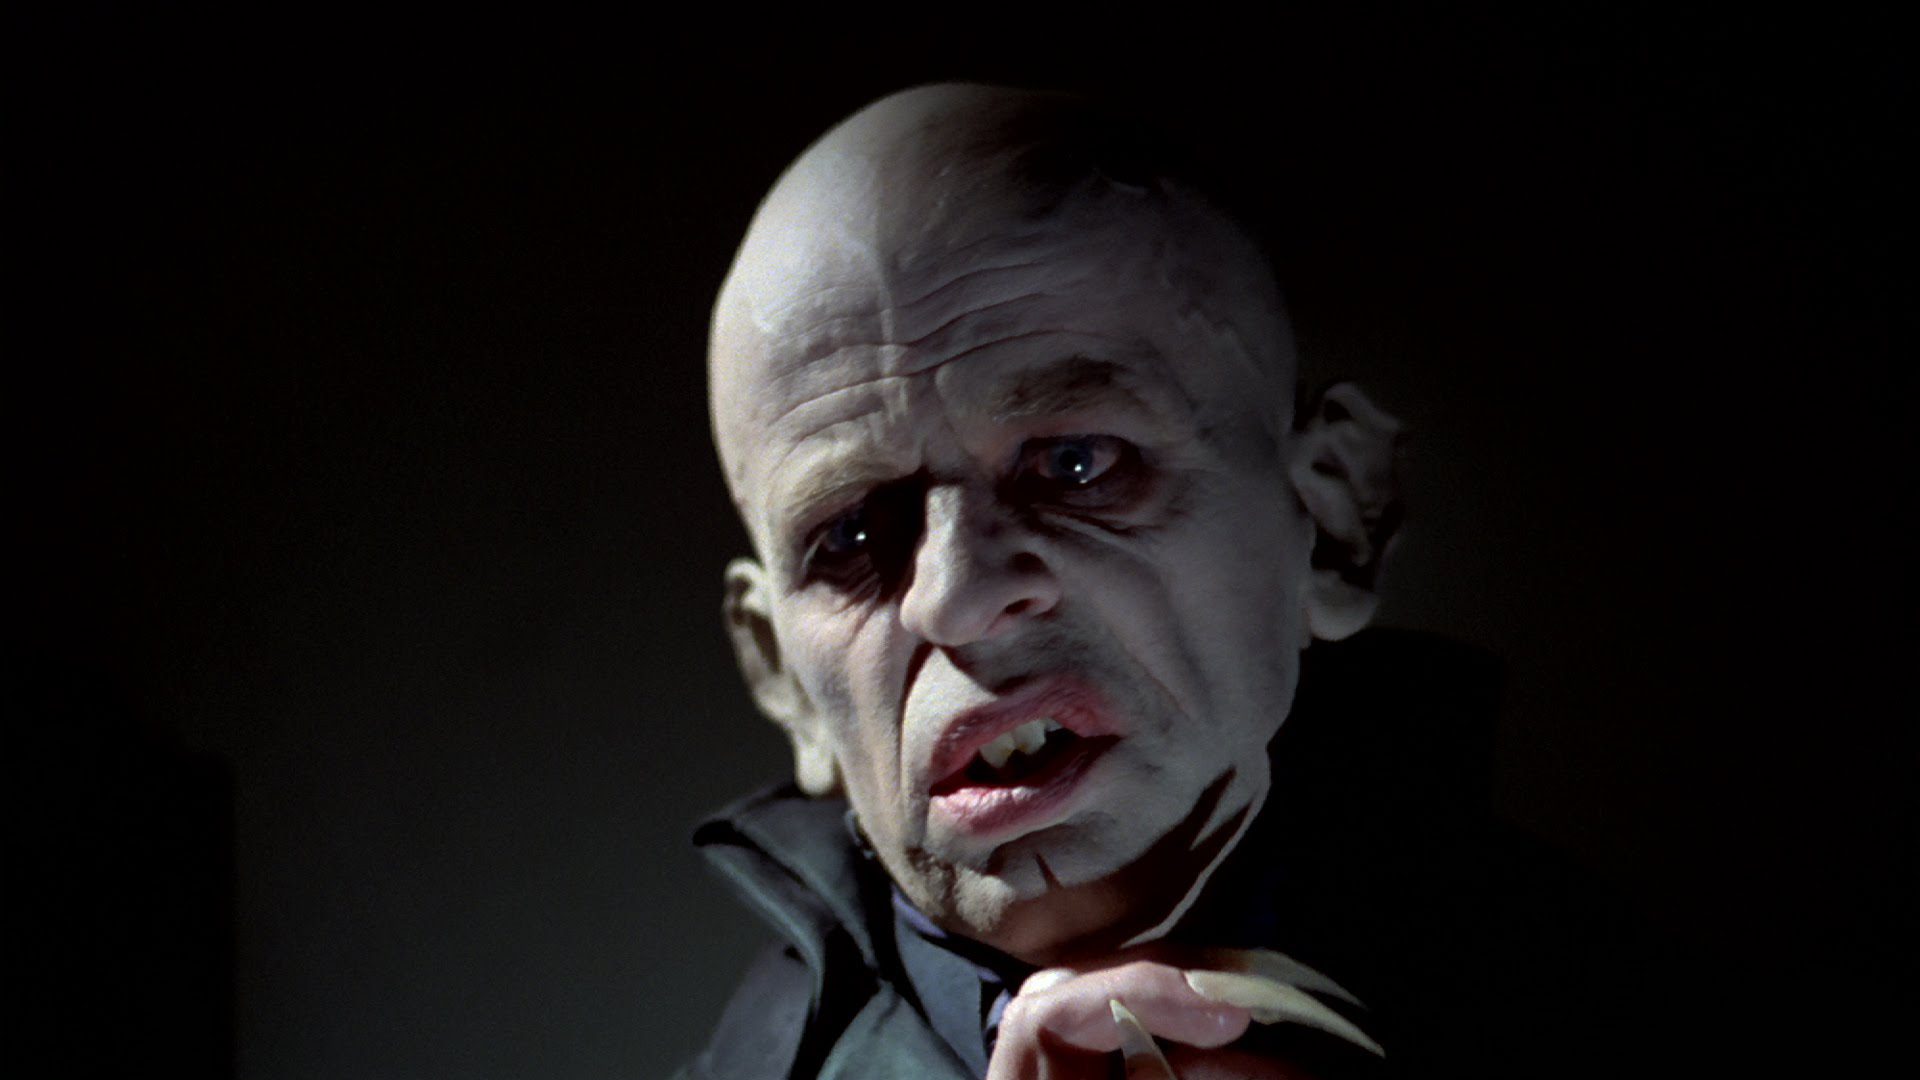 31 Days of Fright: Nosferatu the Vampyre